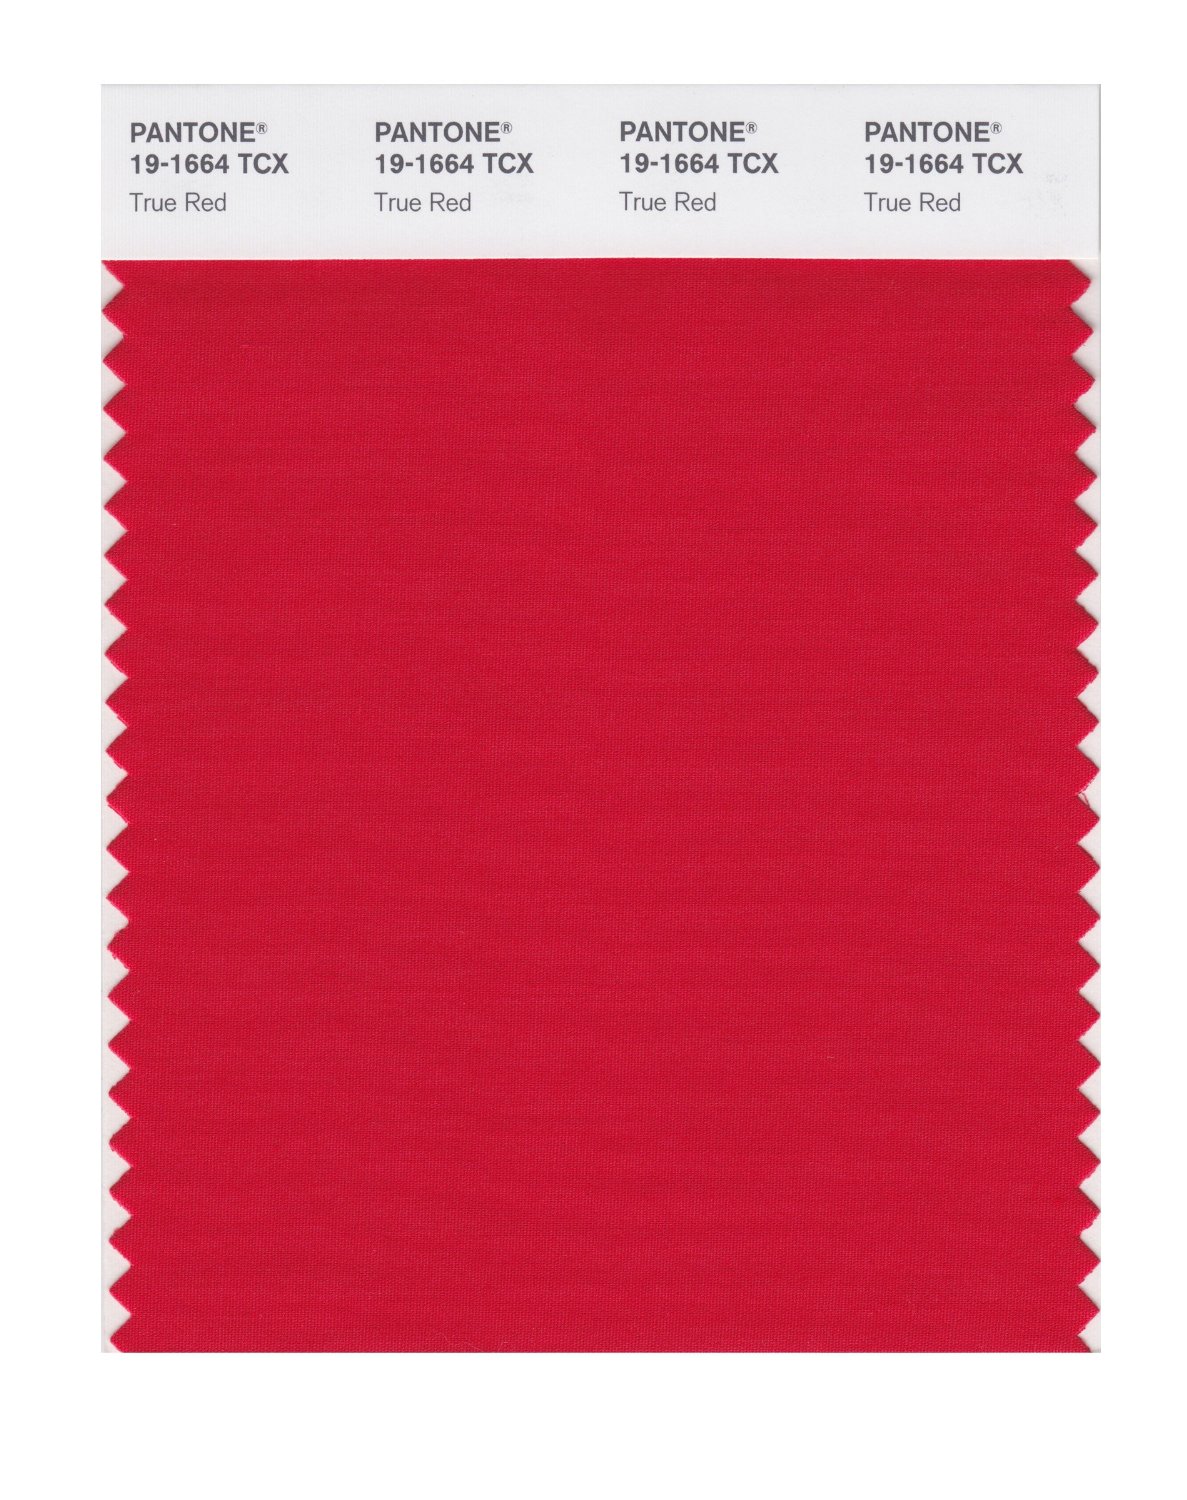 Pantone Cotton Swatch 19-1664 True Red